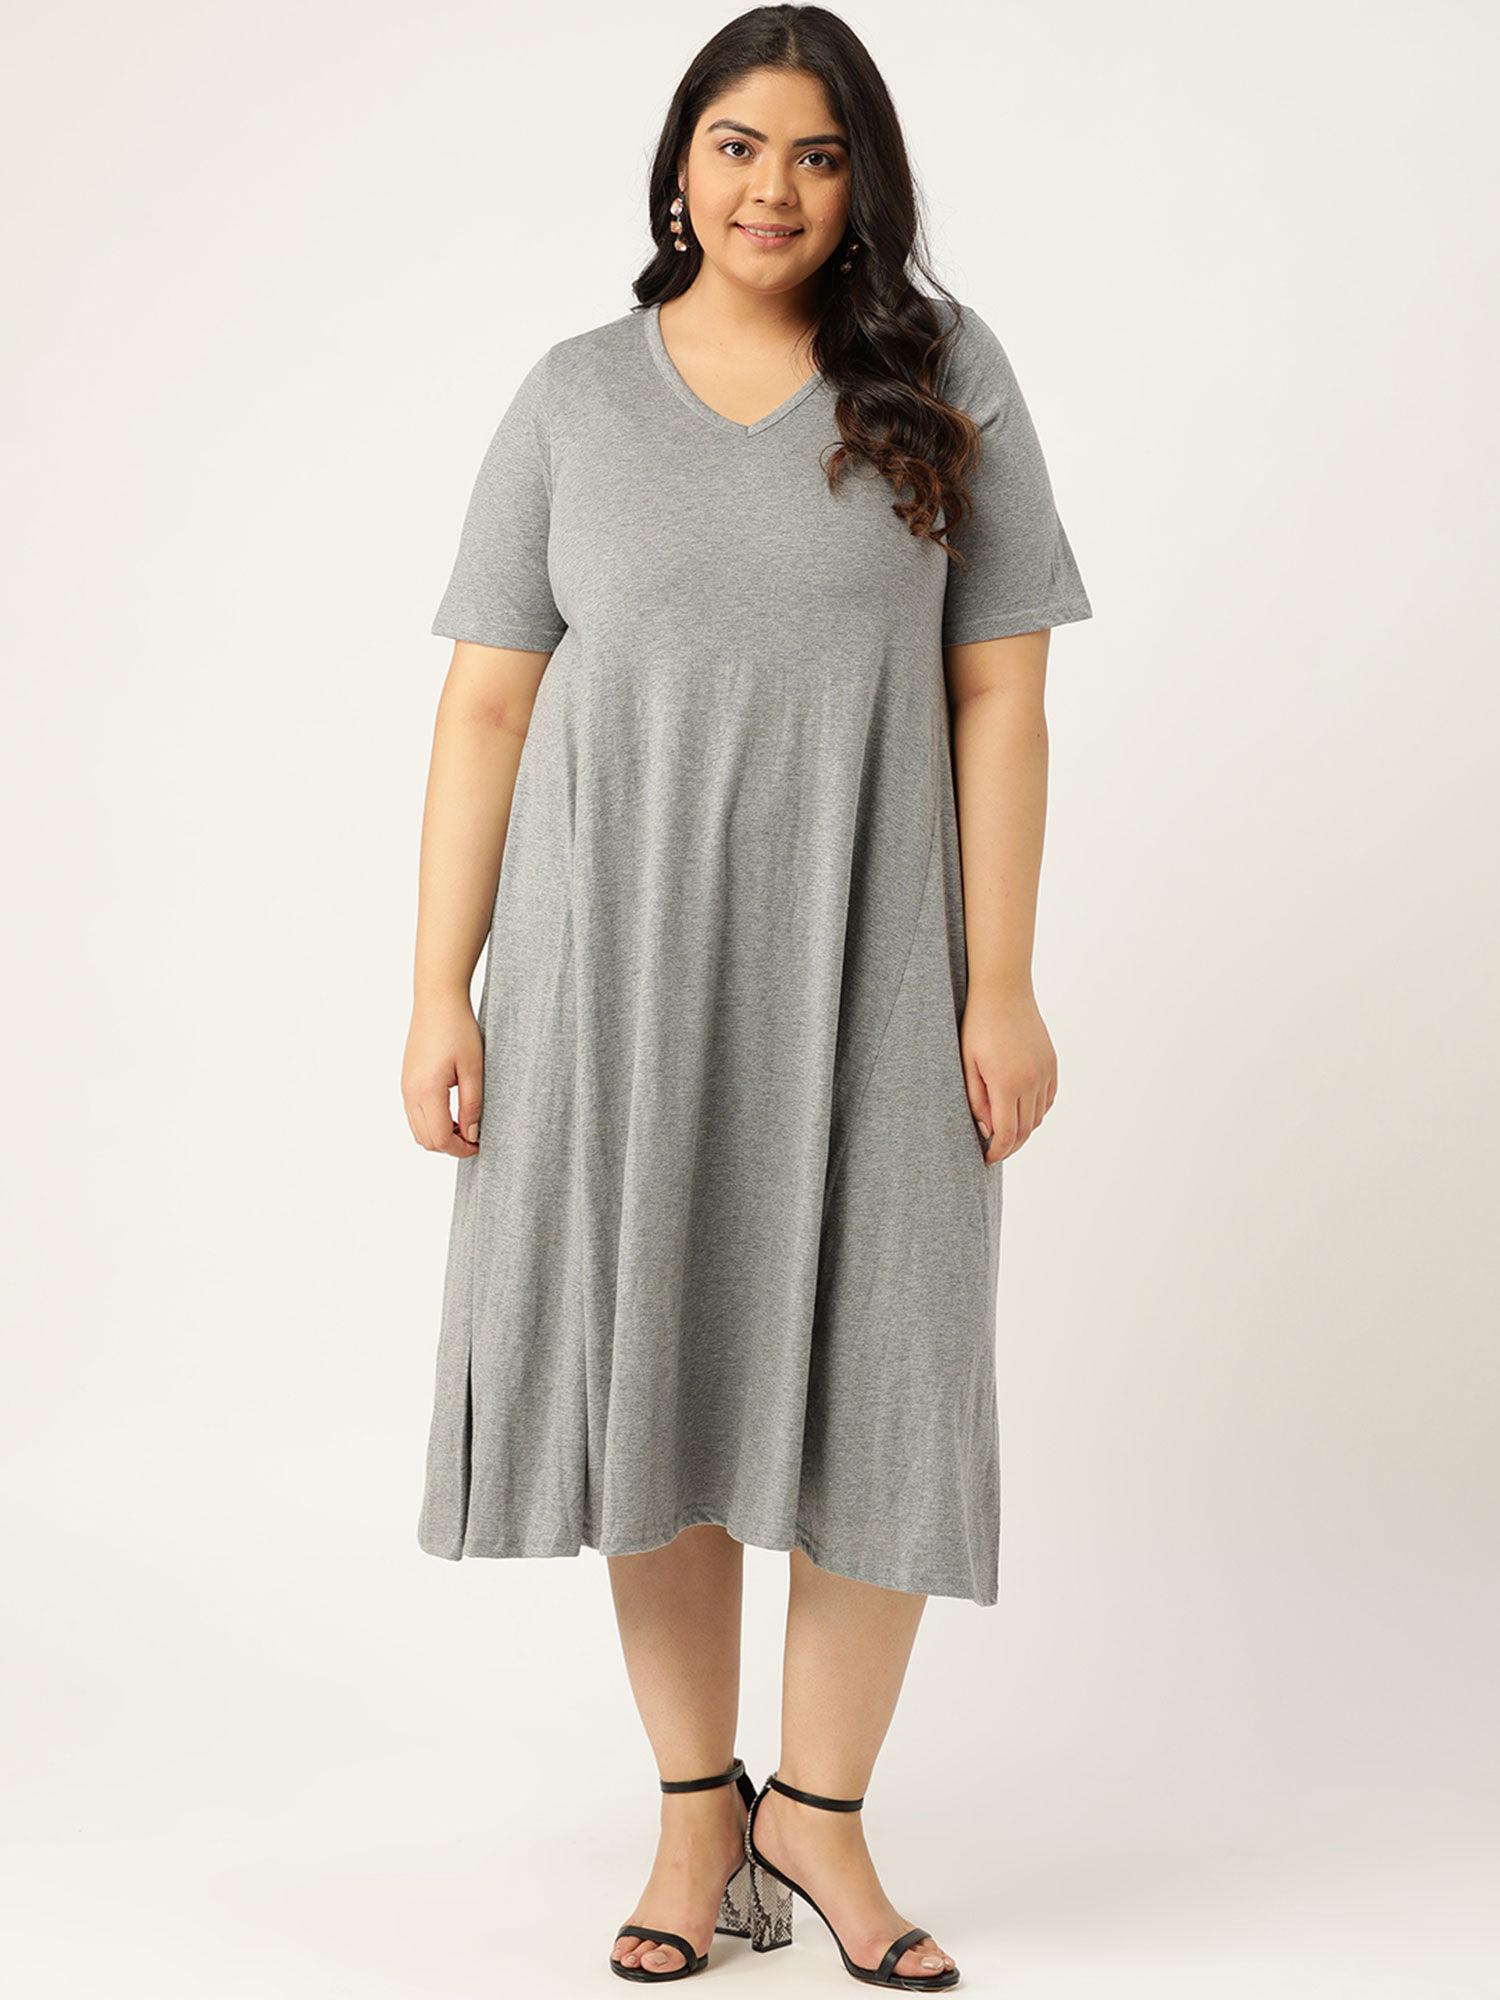 women's light grey solid color v-neck cotton a-line dress